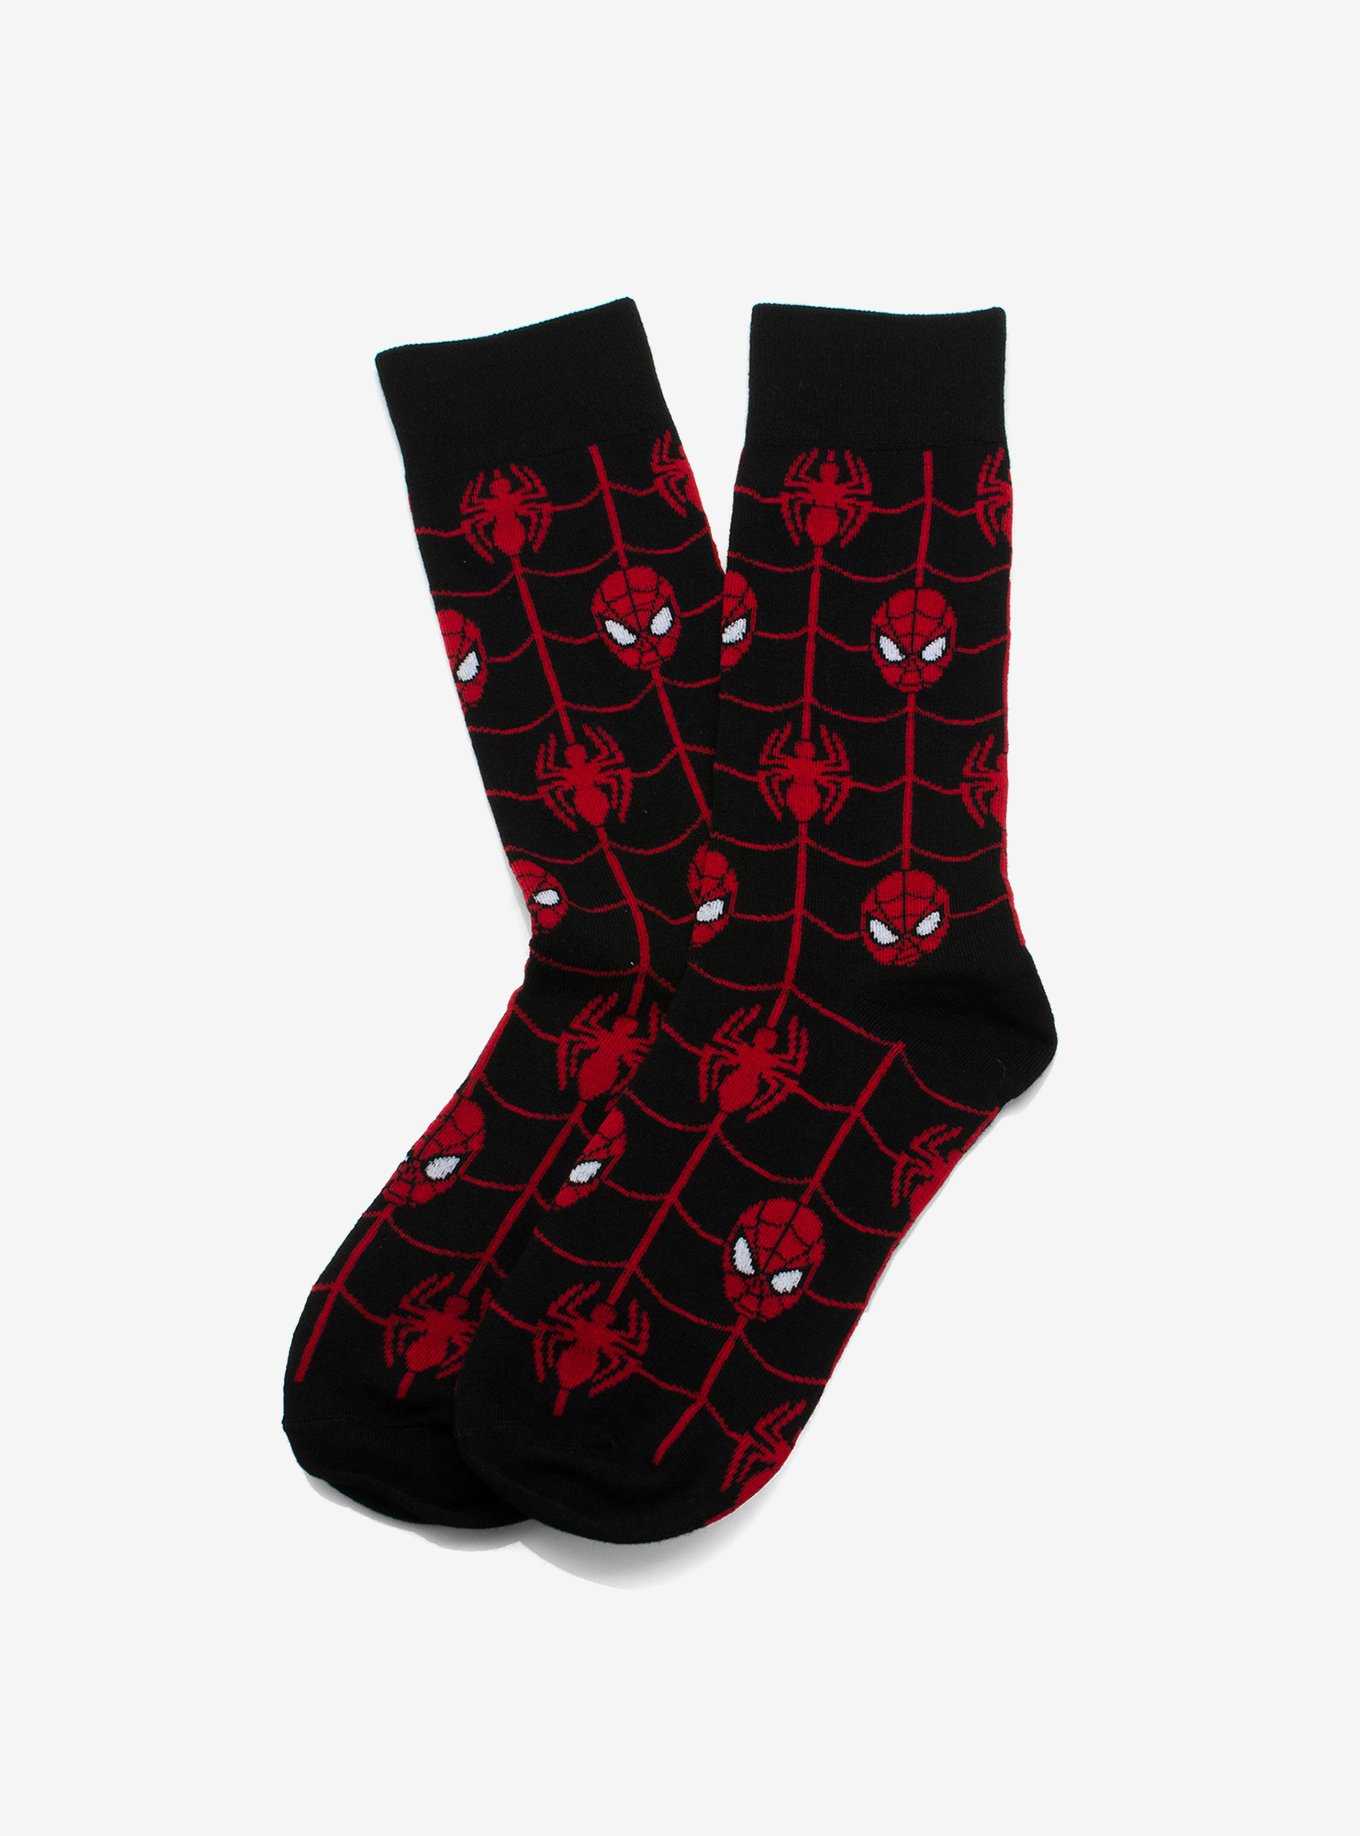 Marvel Spider-Man Web Black Socks, , hi-res